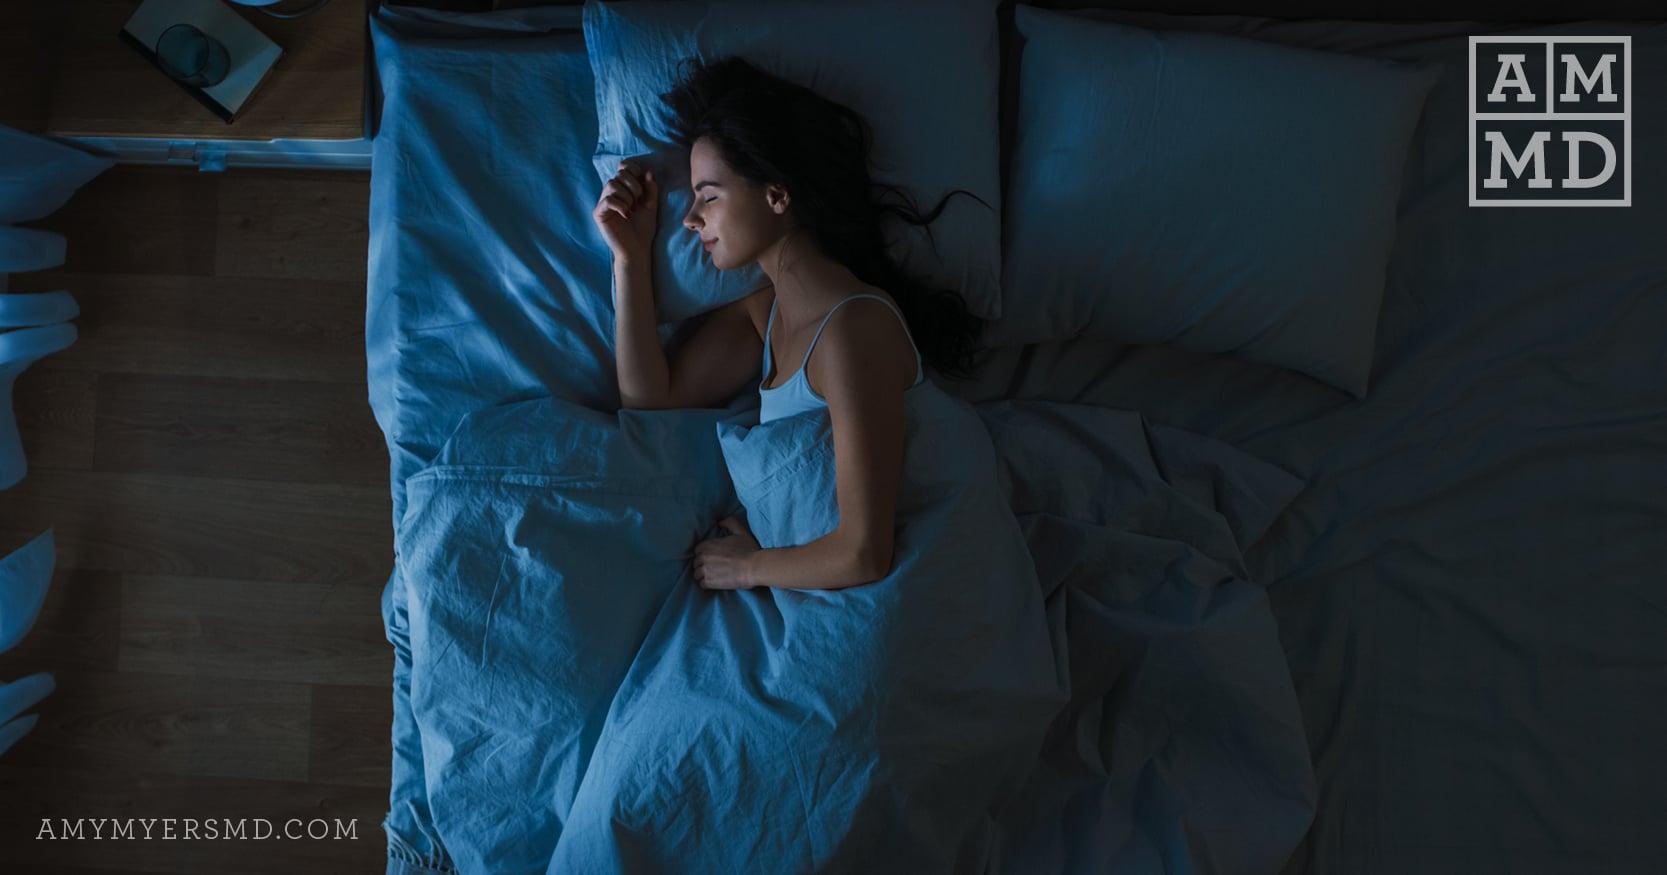 The Benefits of Sleep for Brain Health